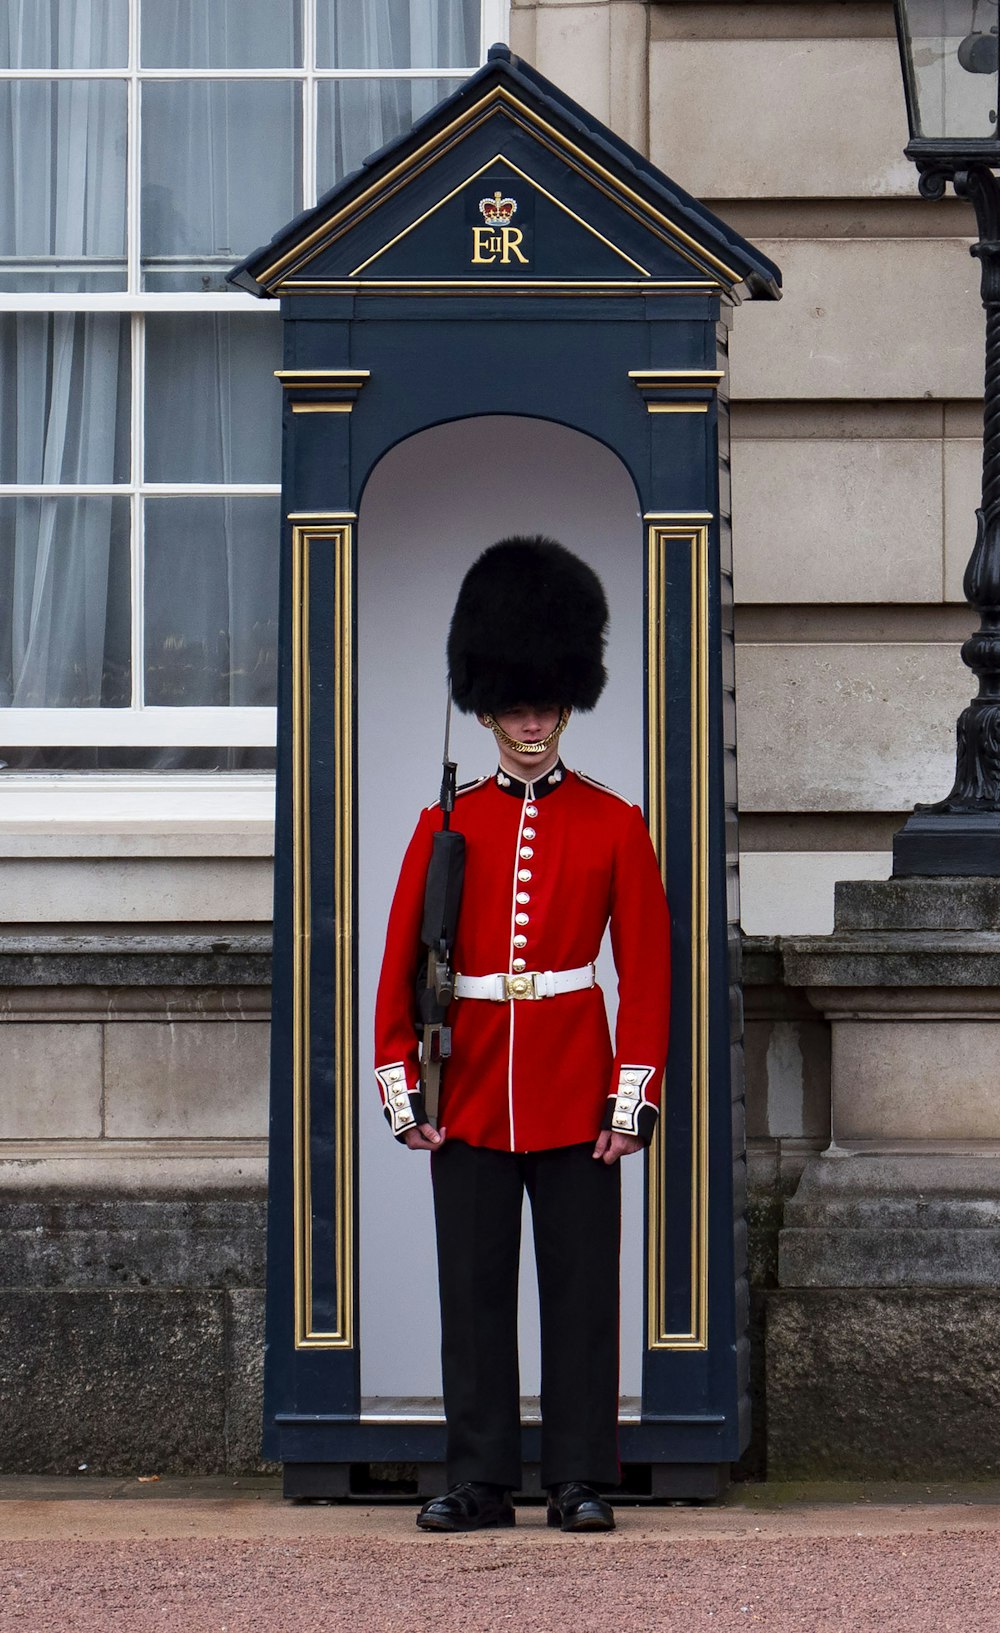 Royal Guard standing near post